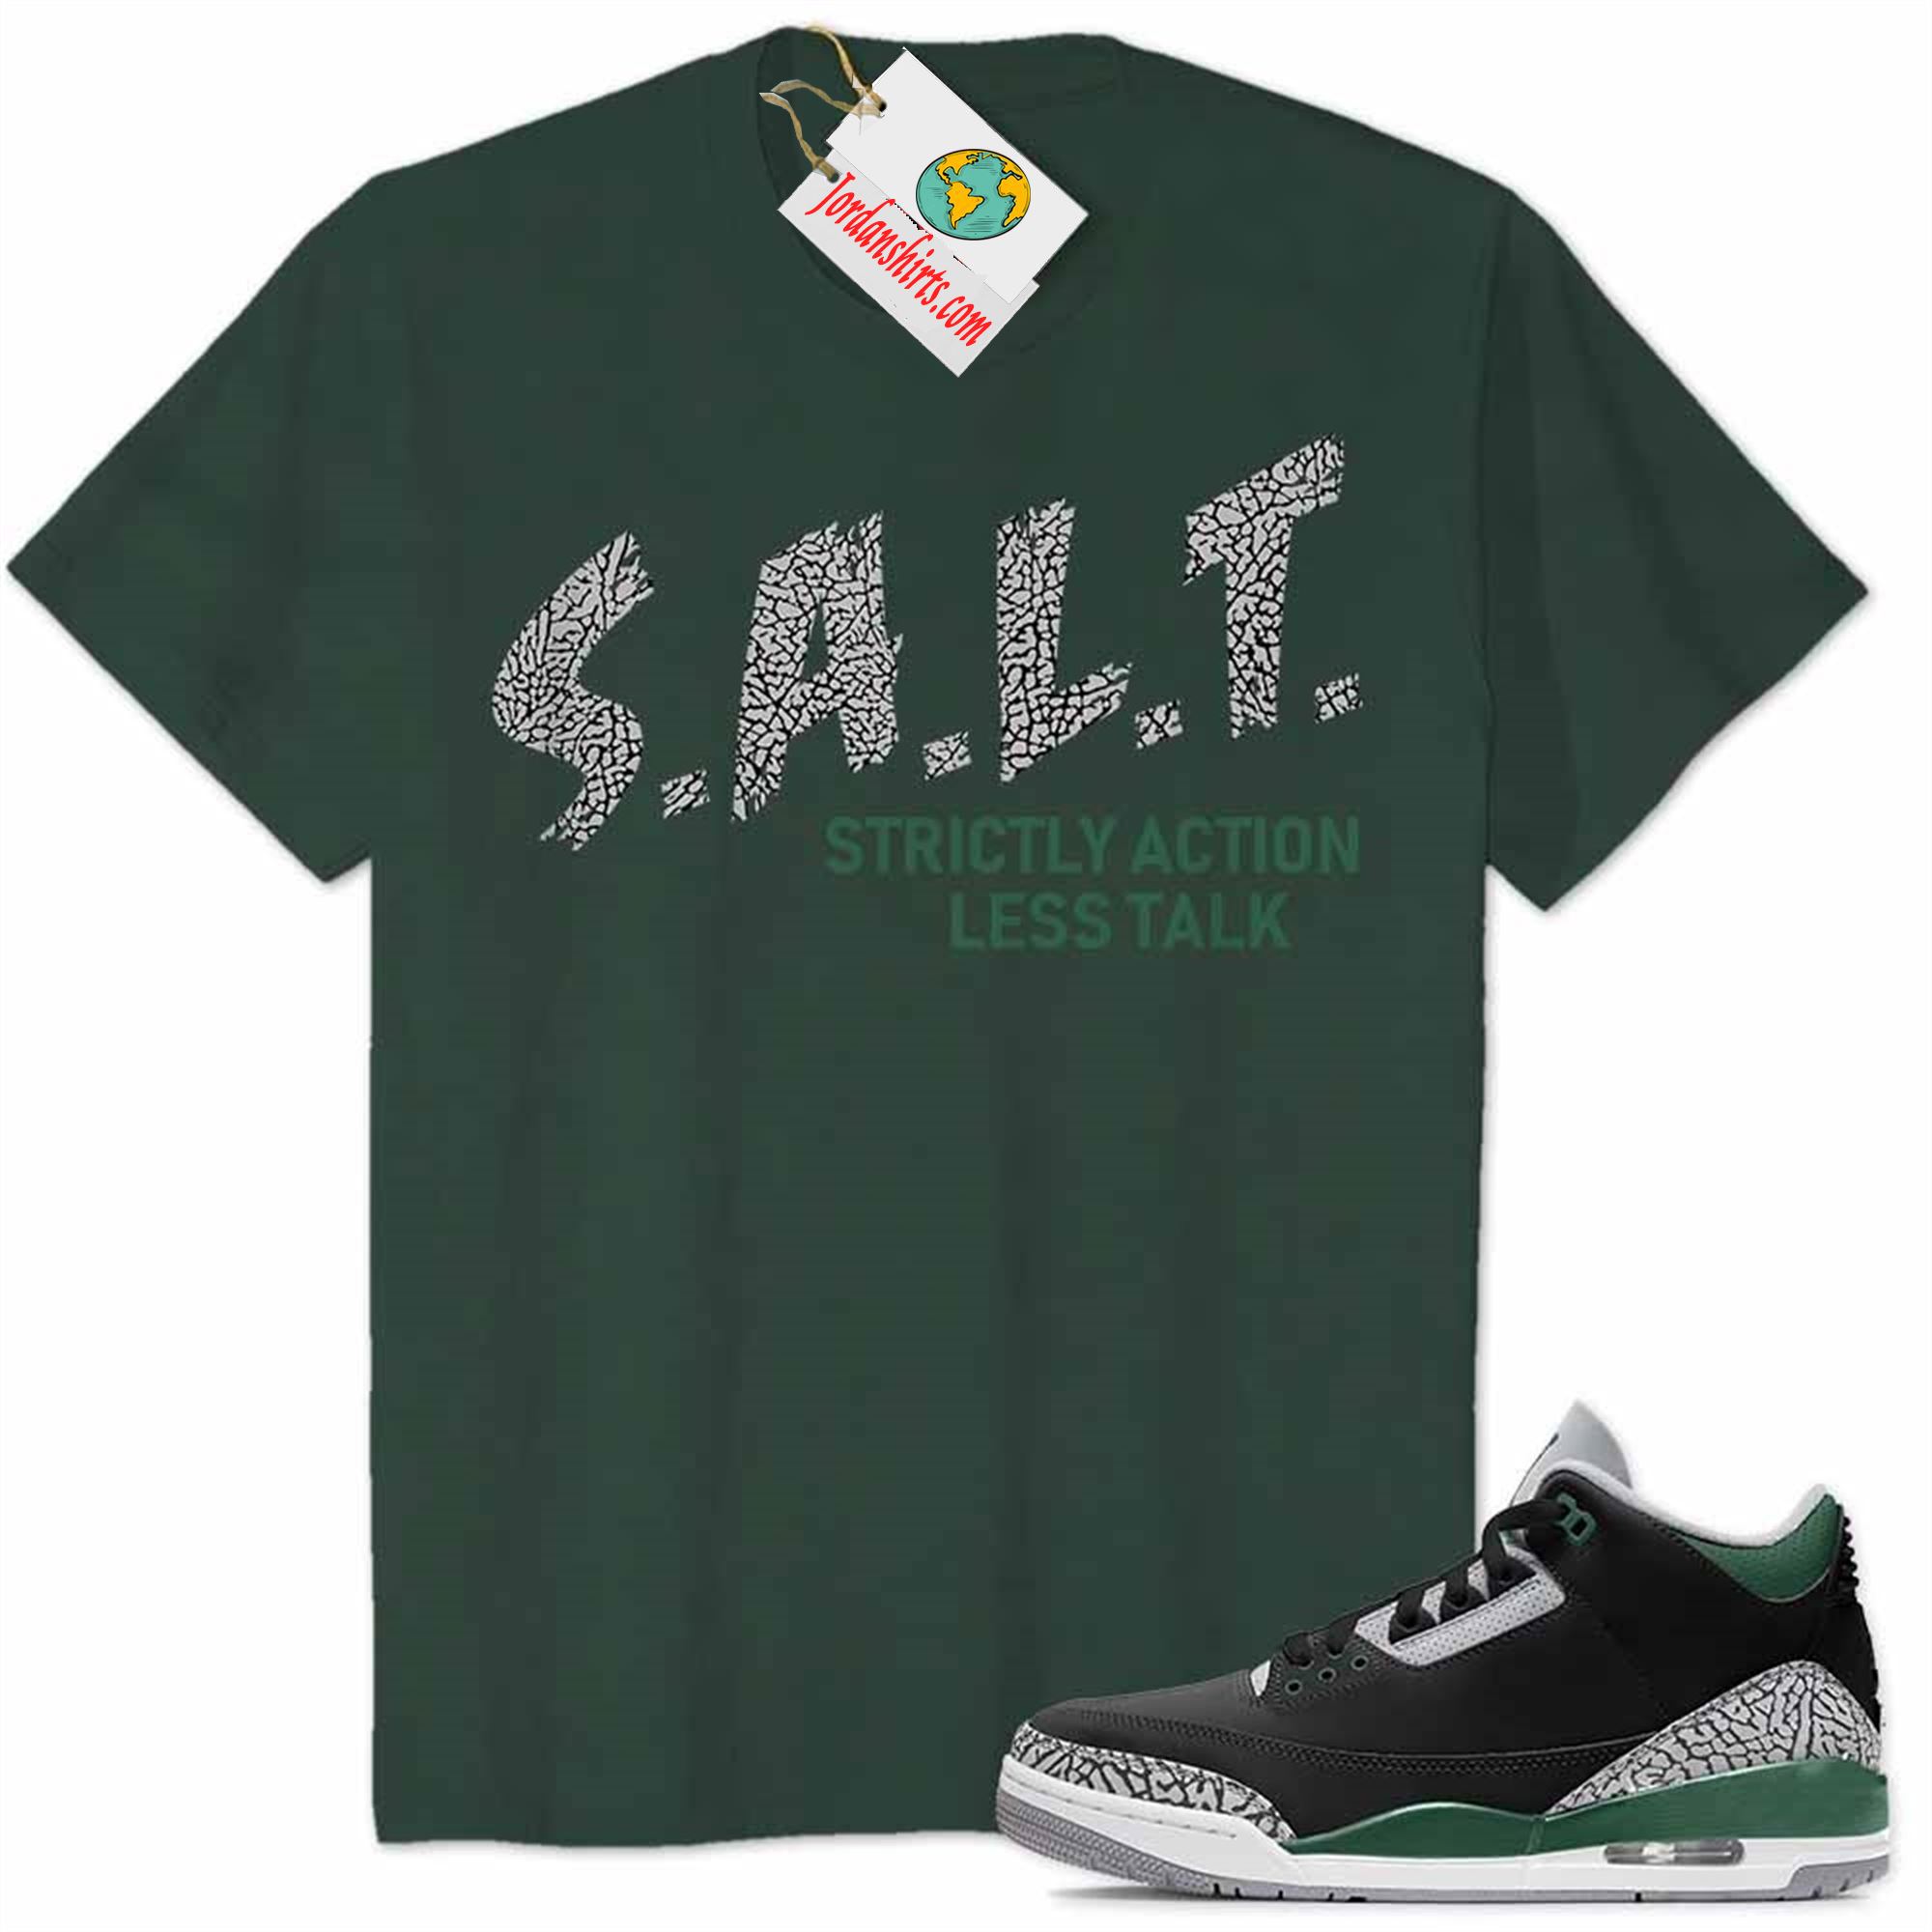 Jordan 3 Shirt, Salt Salt Strictly Action Less Talk Forest Air Jordan 3 Pine Green 3s Full Size Up To 5xl